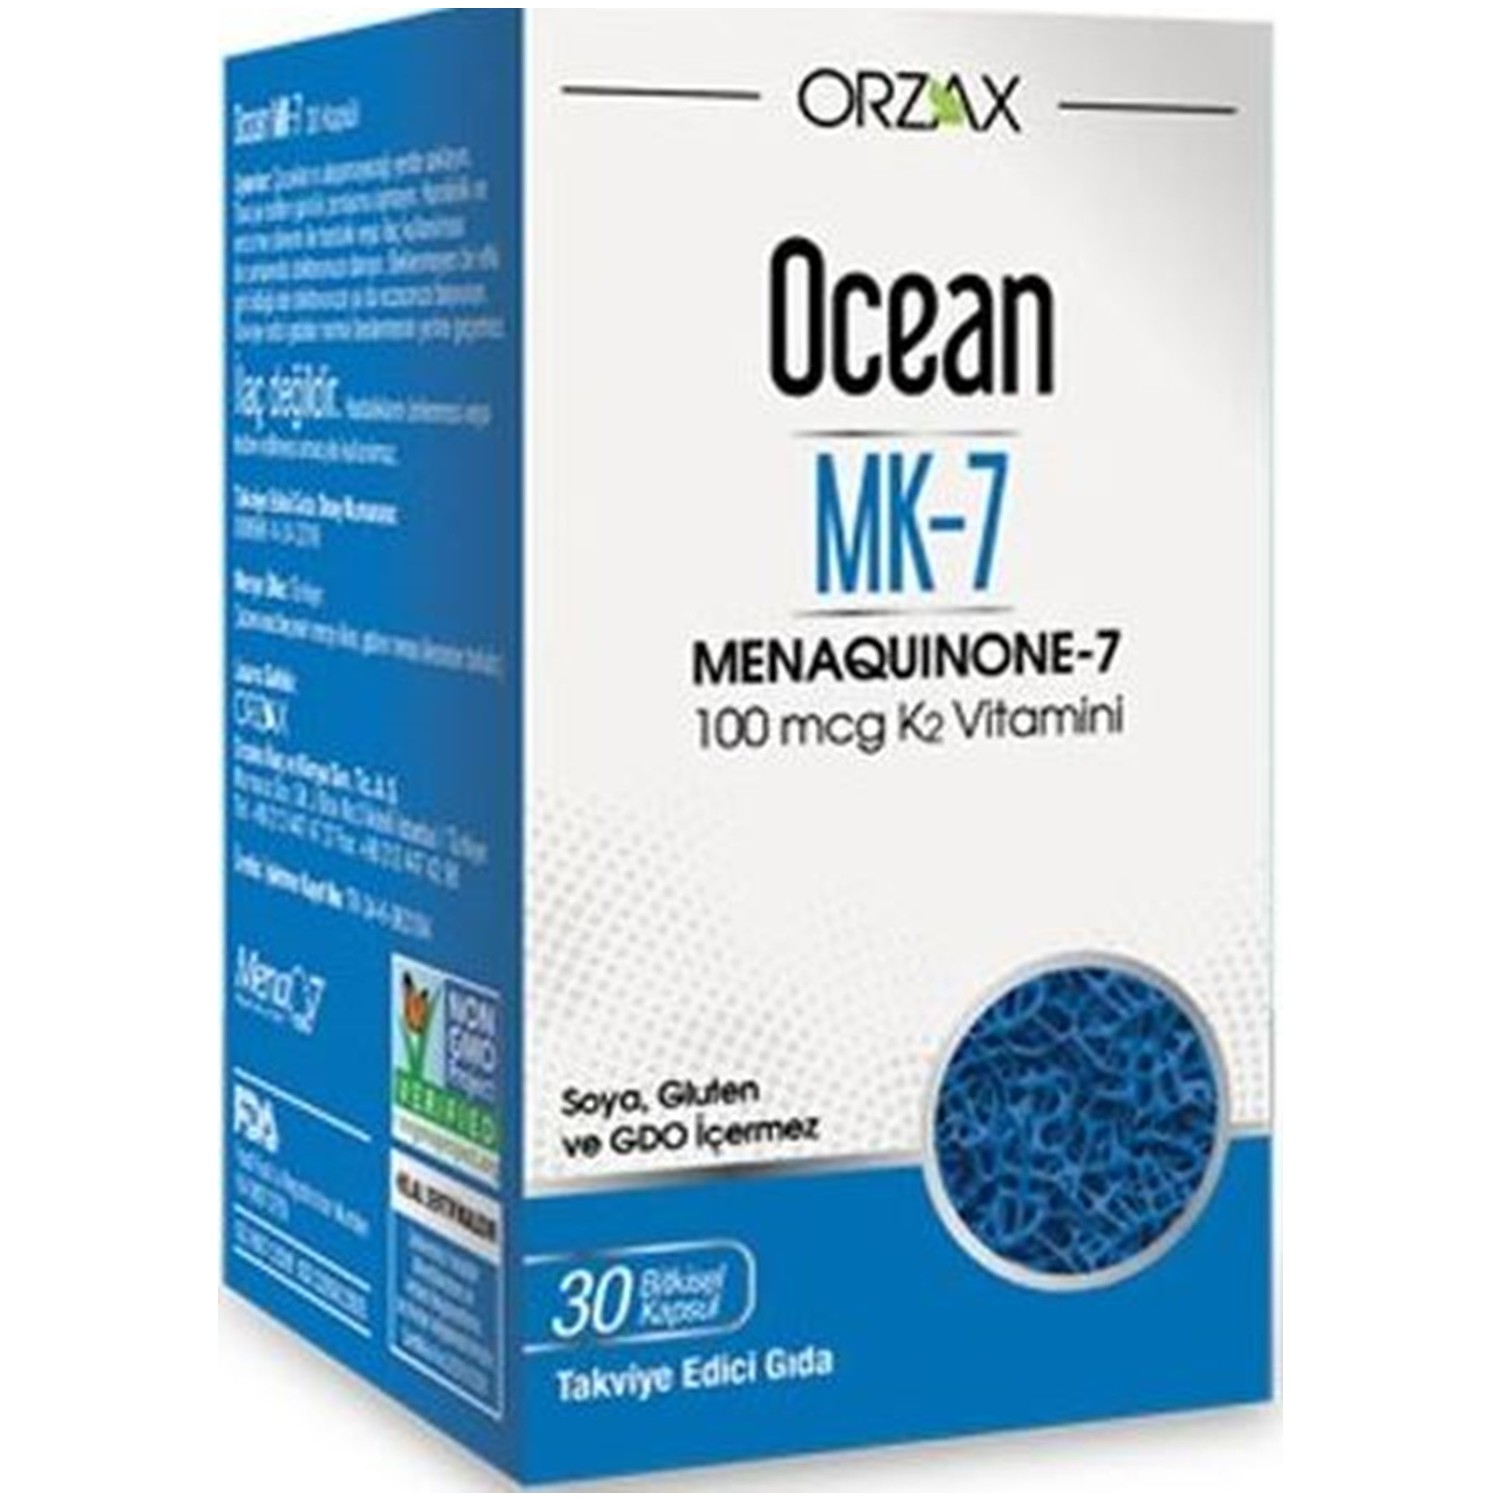 Пищевая добавка Orzax Ocean Mk-7 Vitamin К2 100 мкг, 30 капсул фотографии